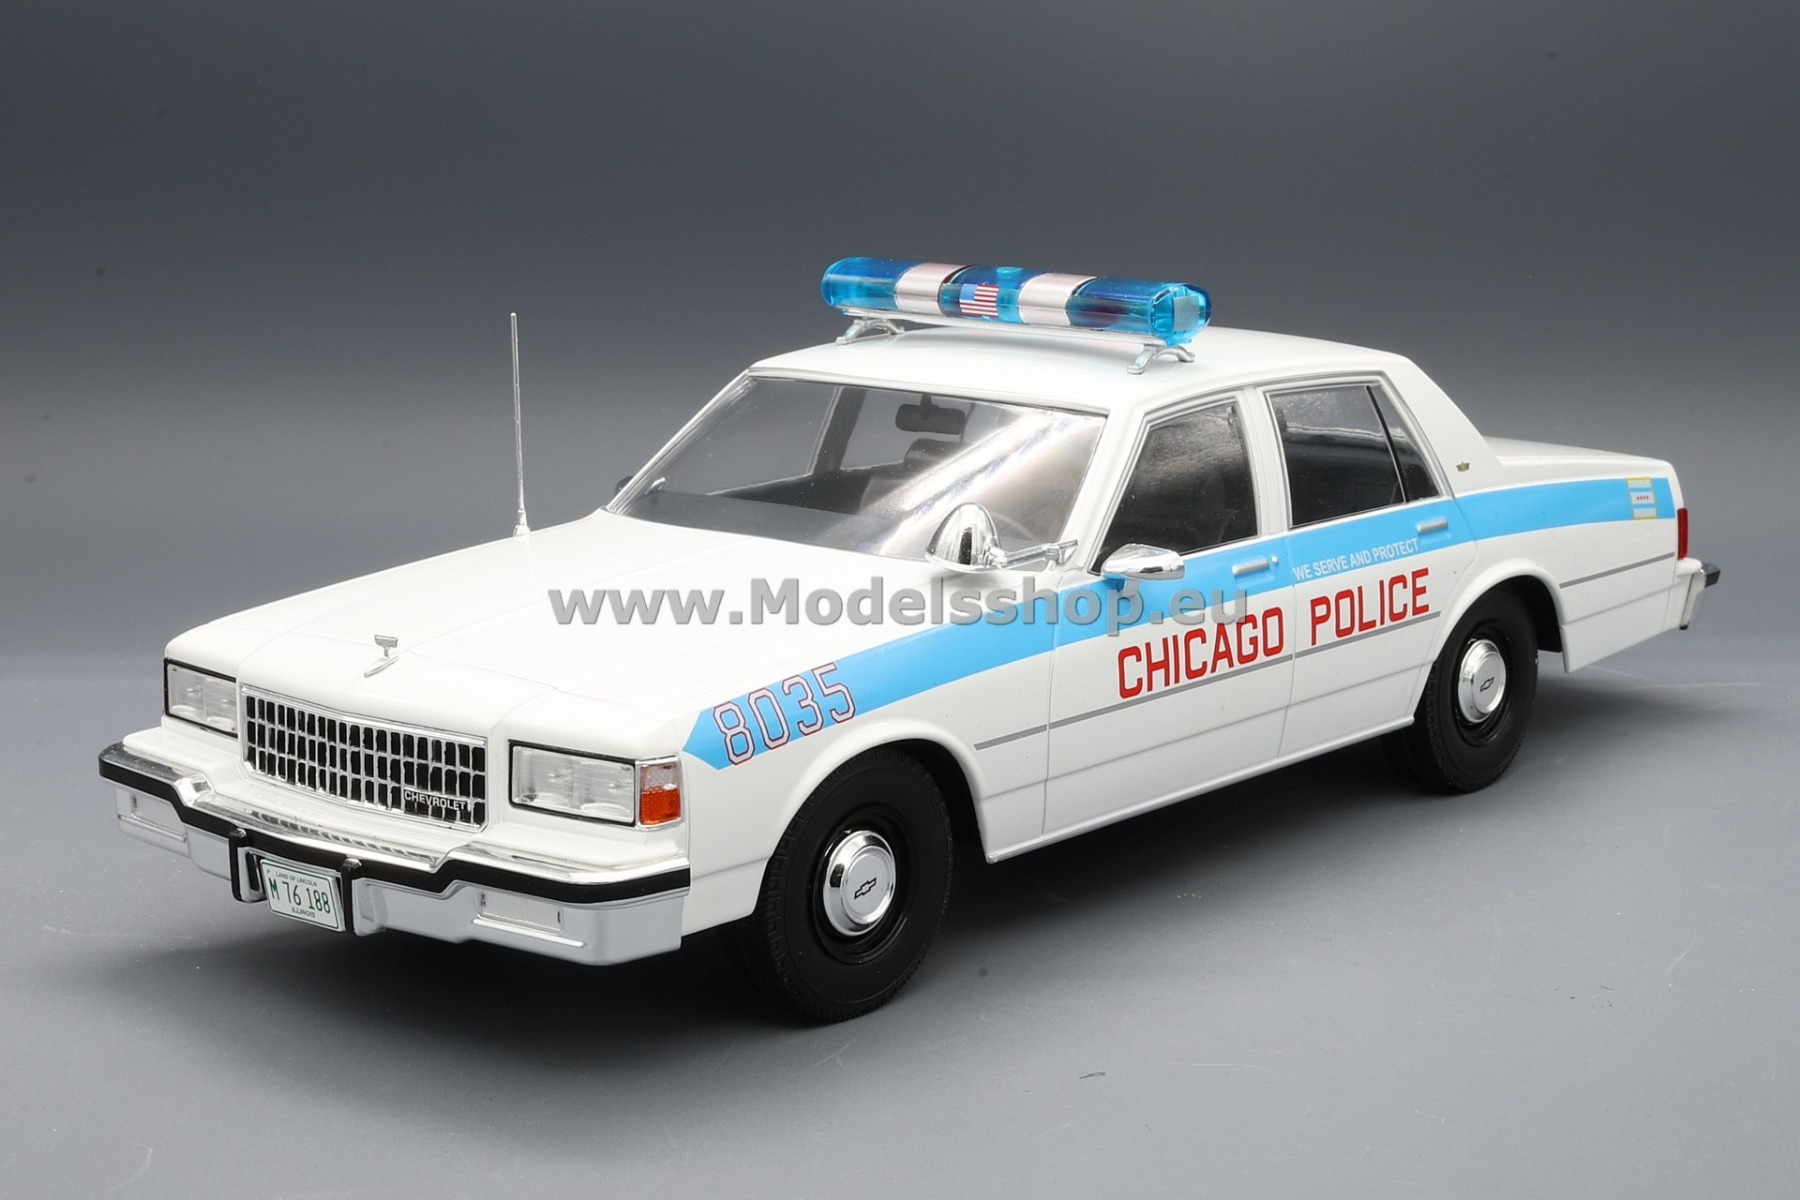 Chevrolet Caprice, Chicago Police Department